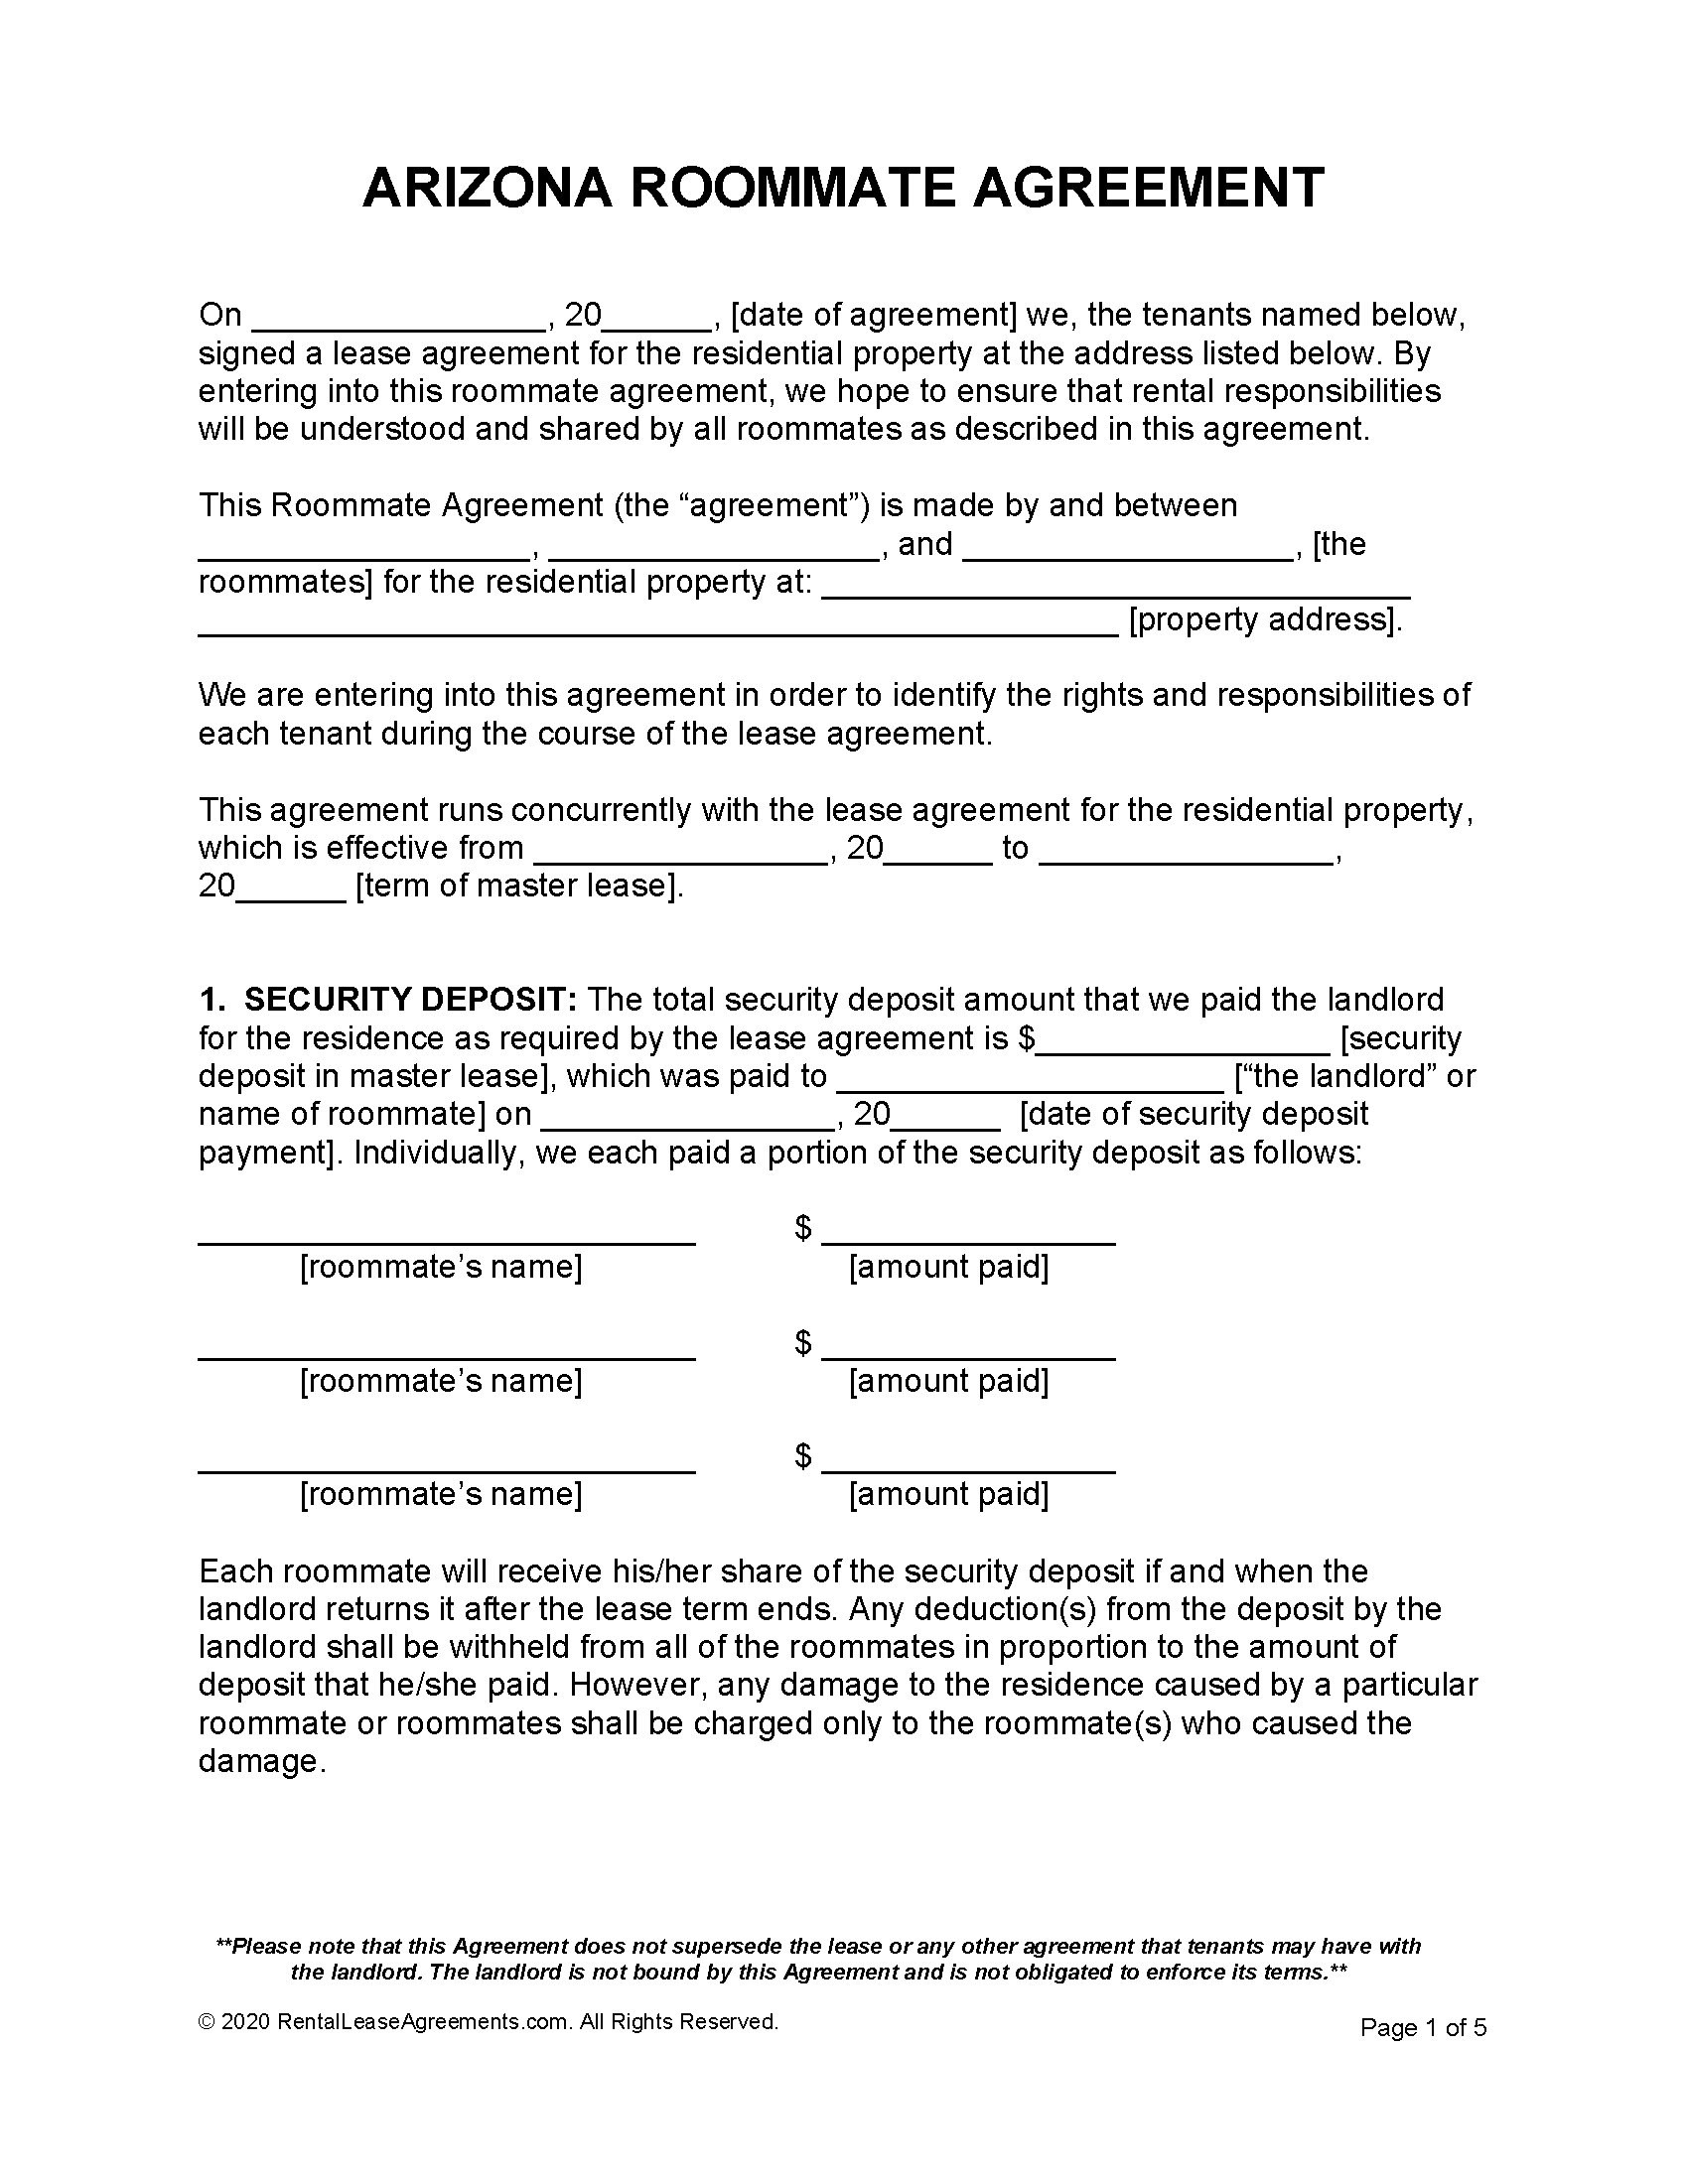 free-arizona-roommate-agreement-template-pdf-ms-word